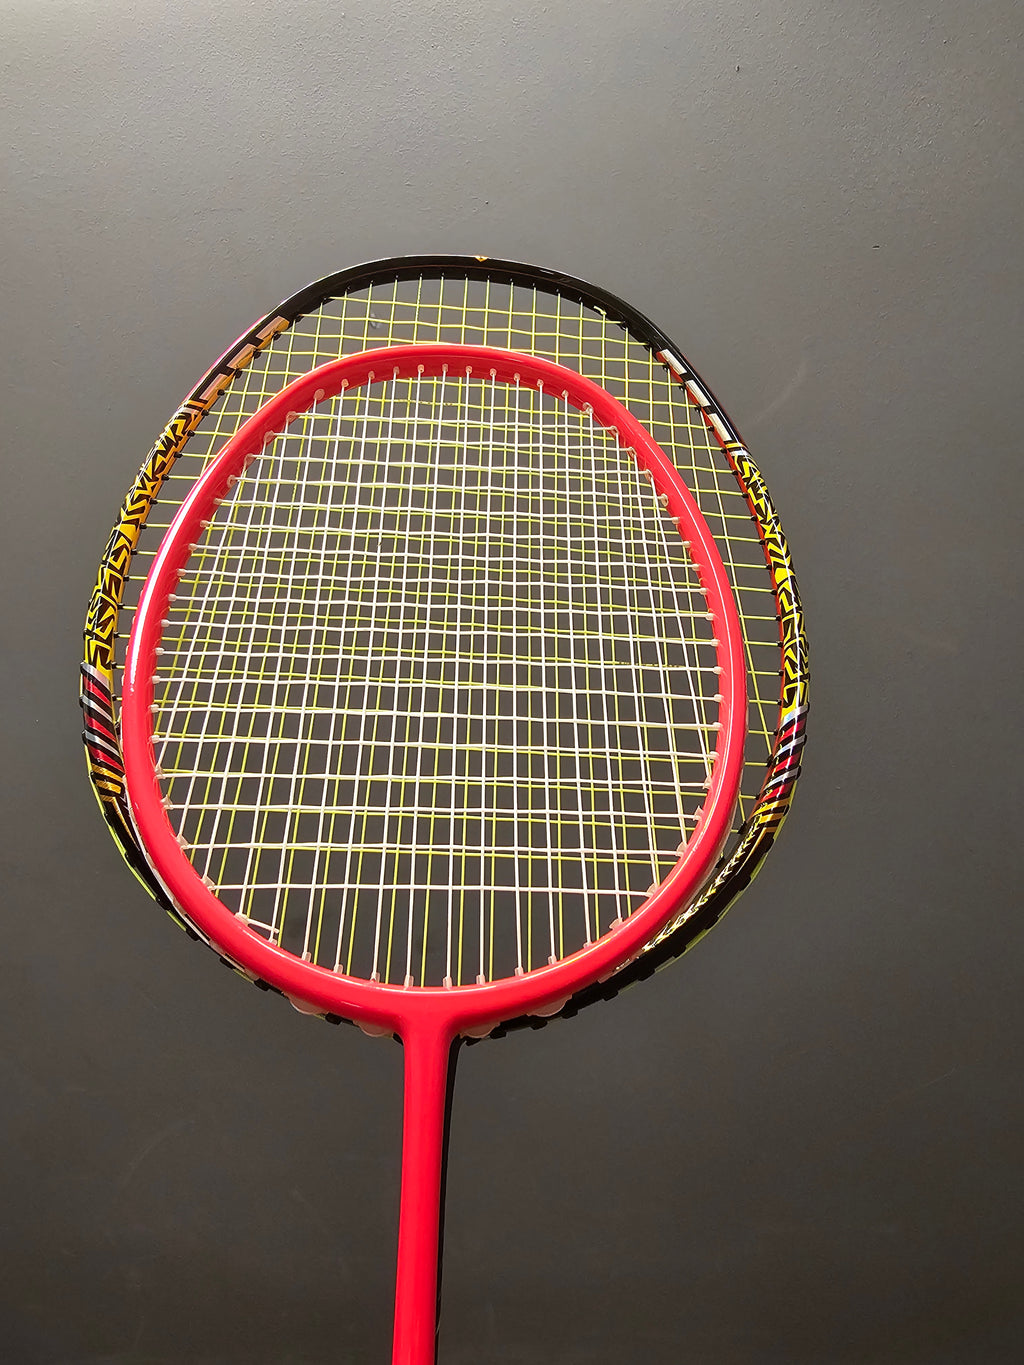 Badminton sweet spot training Rackets - badminton racket review